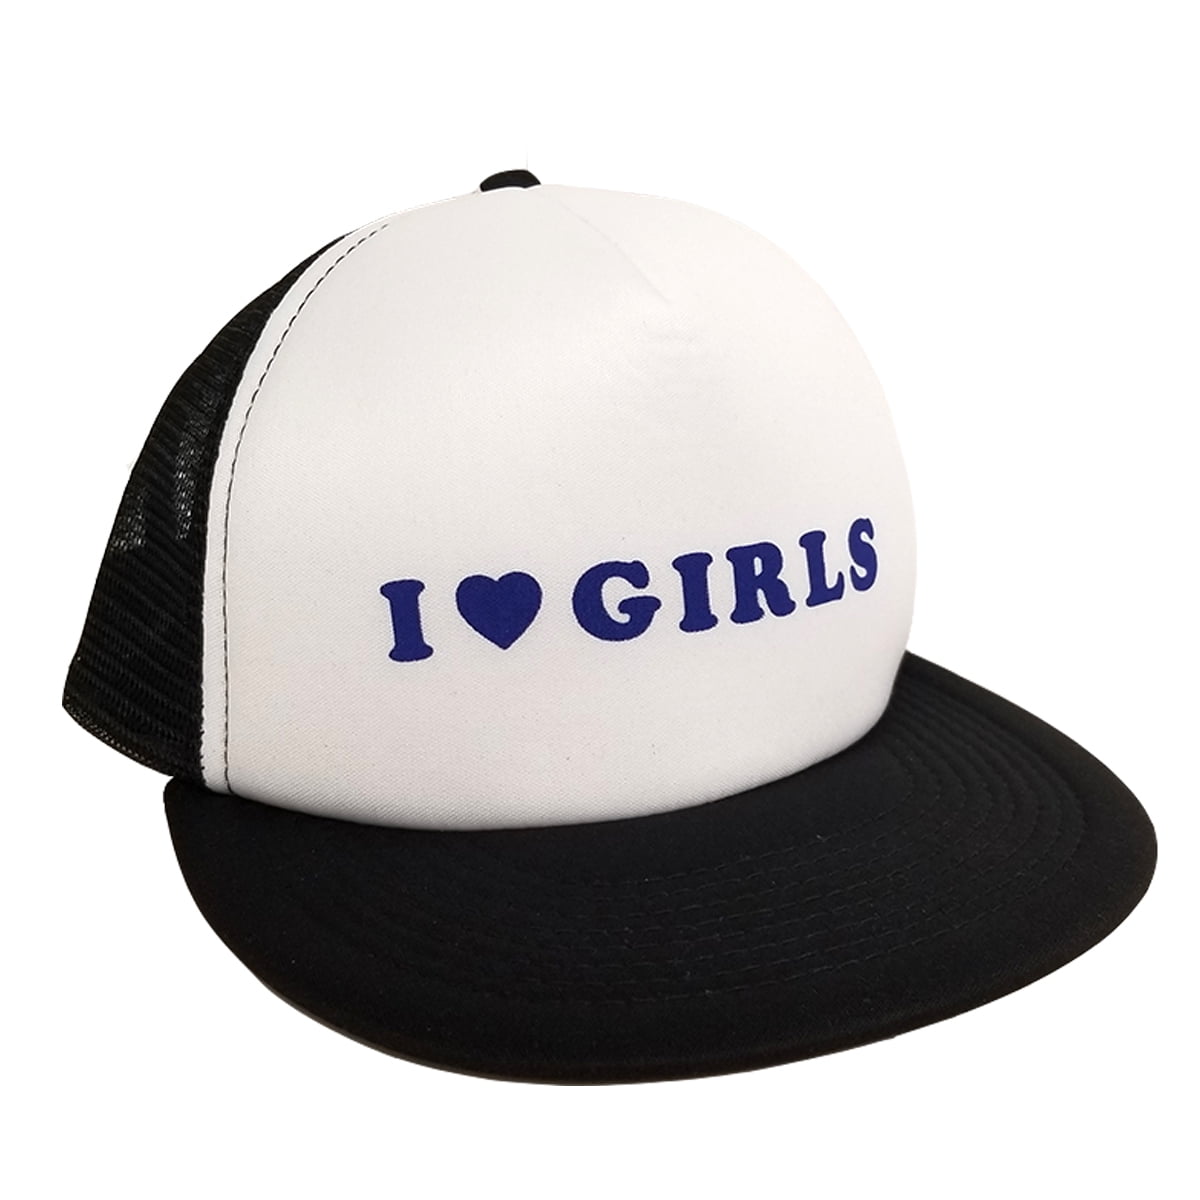 uykjuykj Baseball Caps Hats Mesh Baseball Caps Snapback Hat Trust Me Im an Unicorn Boys-Girl Adjustable Unique Personality Cap 